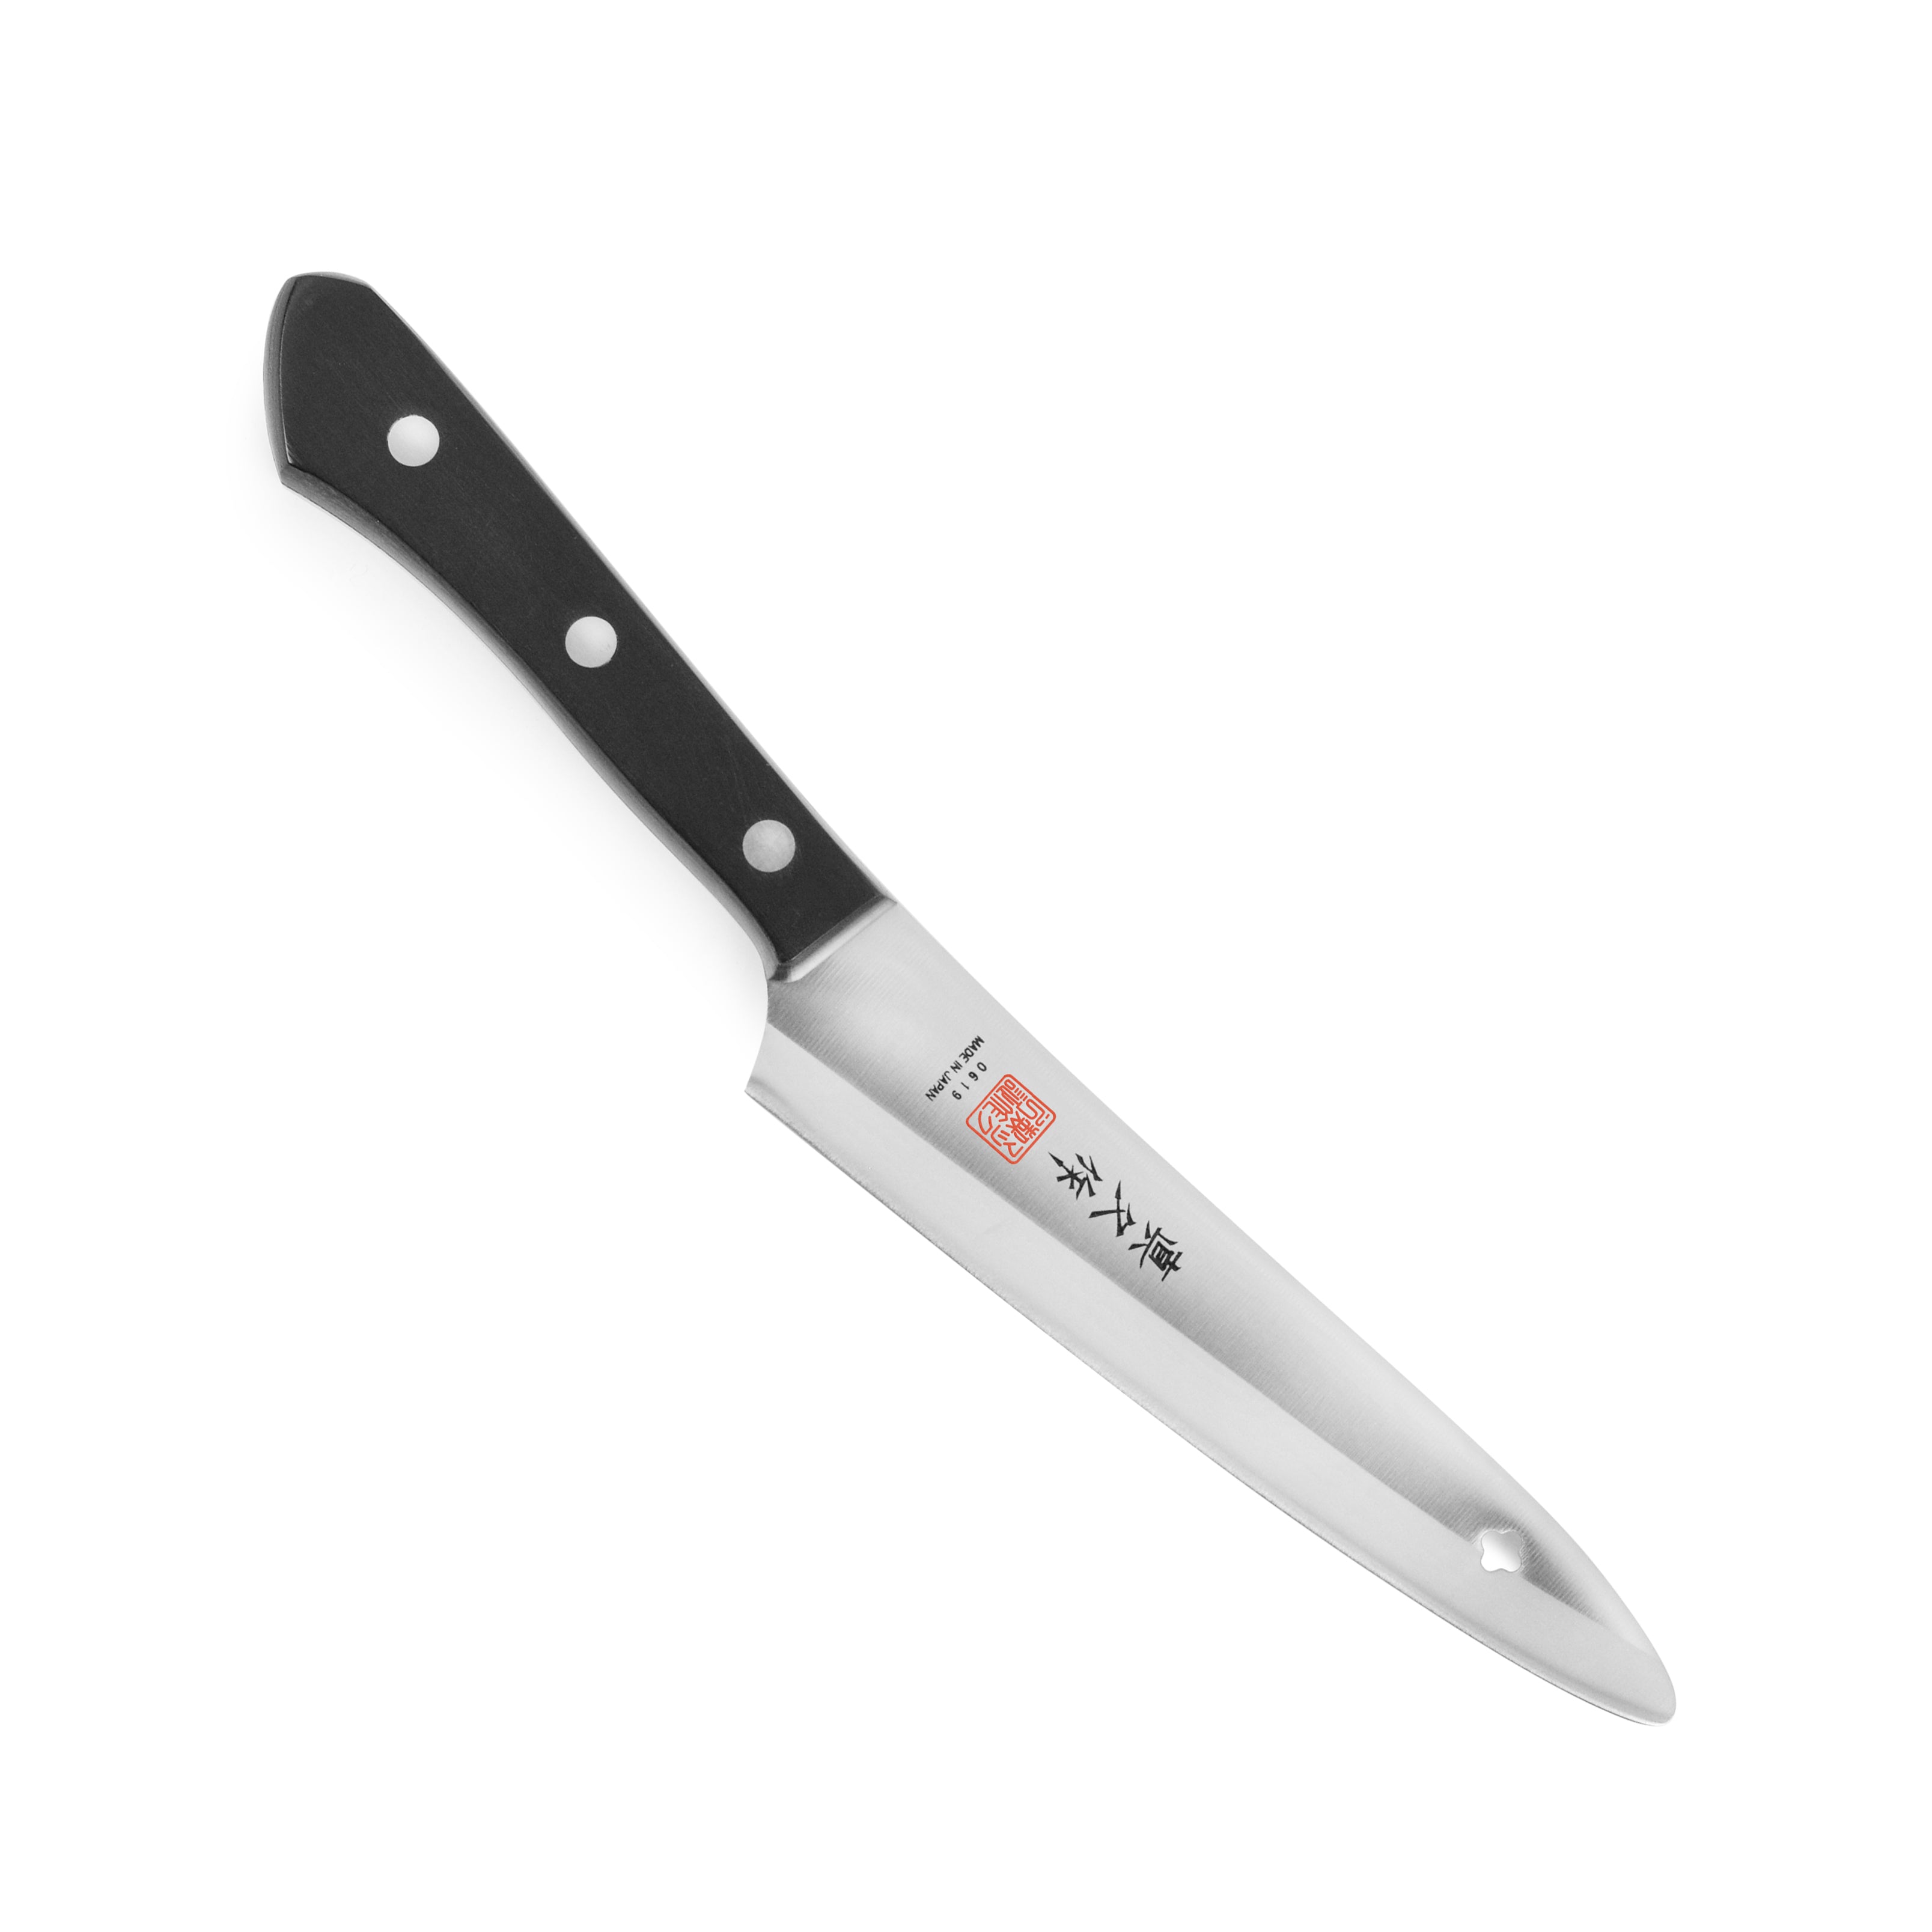 Mac Knife Superior Chef's Knife, 7-Inch